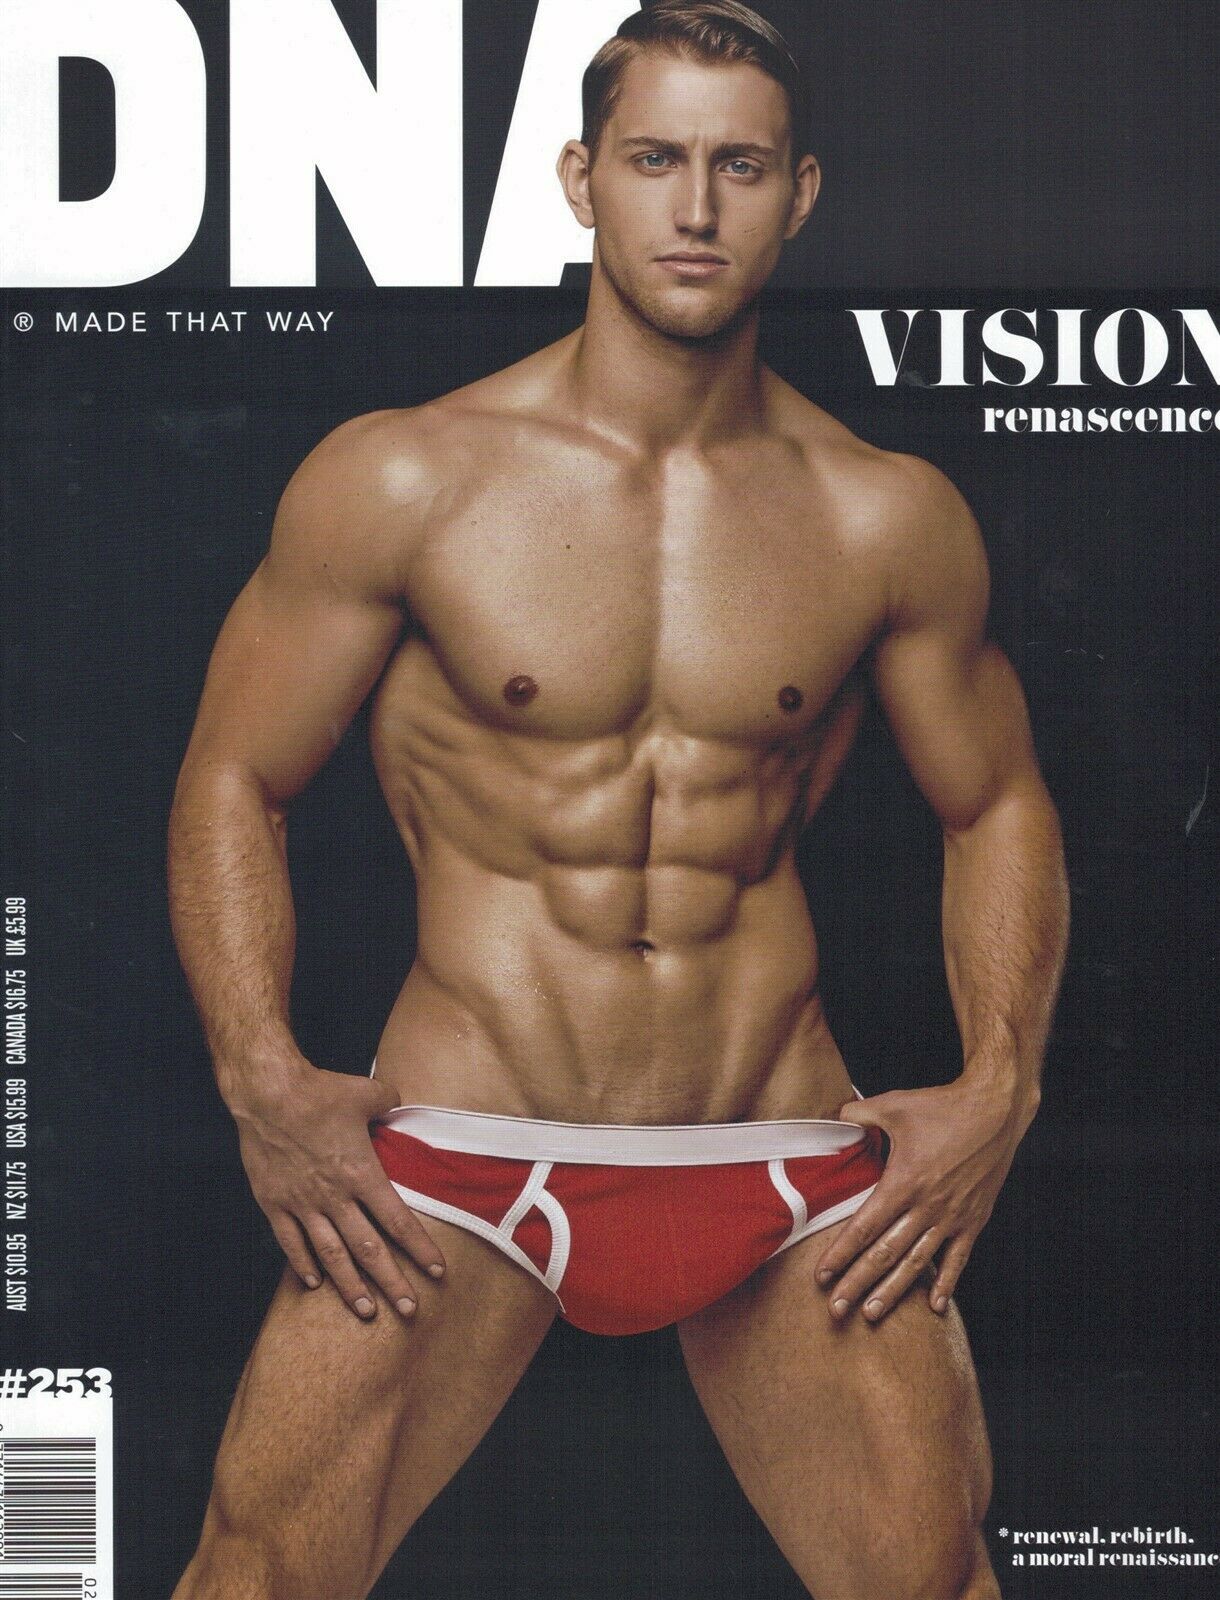 DNA # 253 magazine reviews